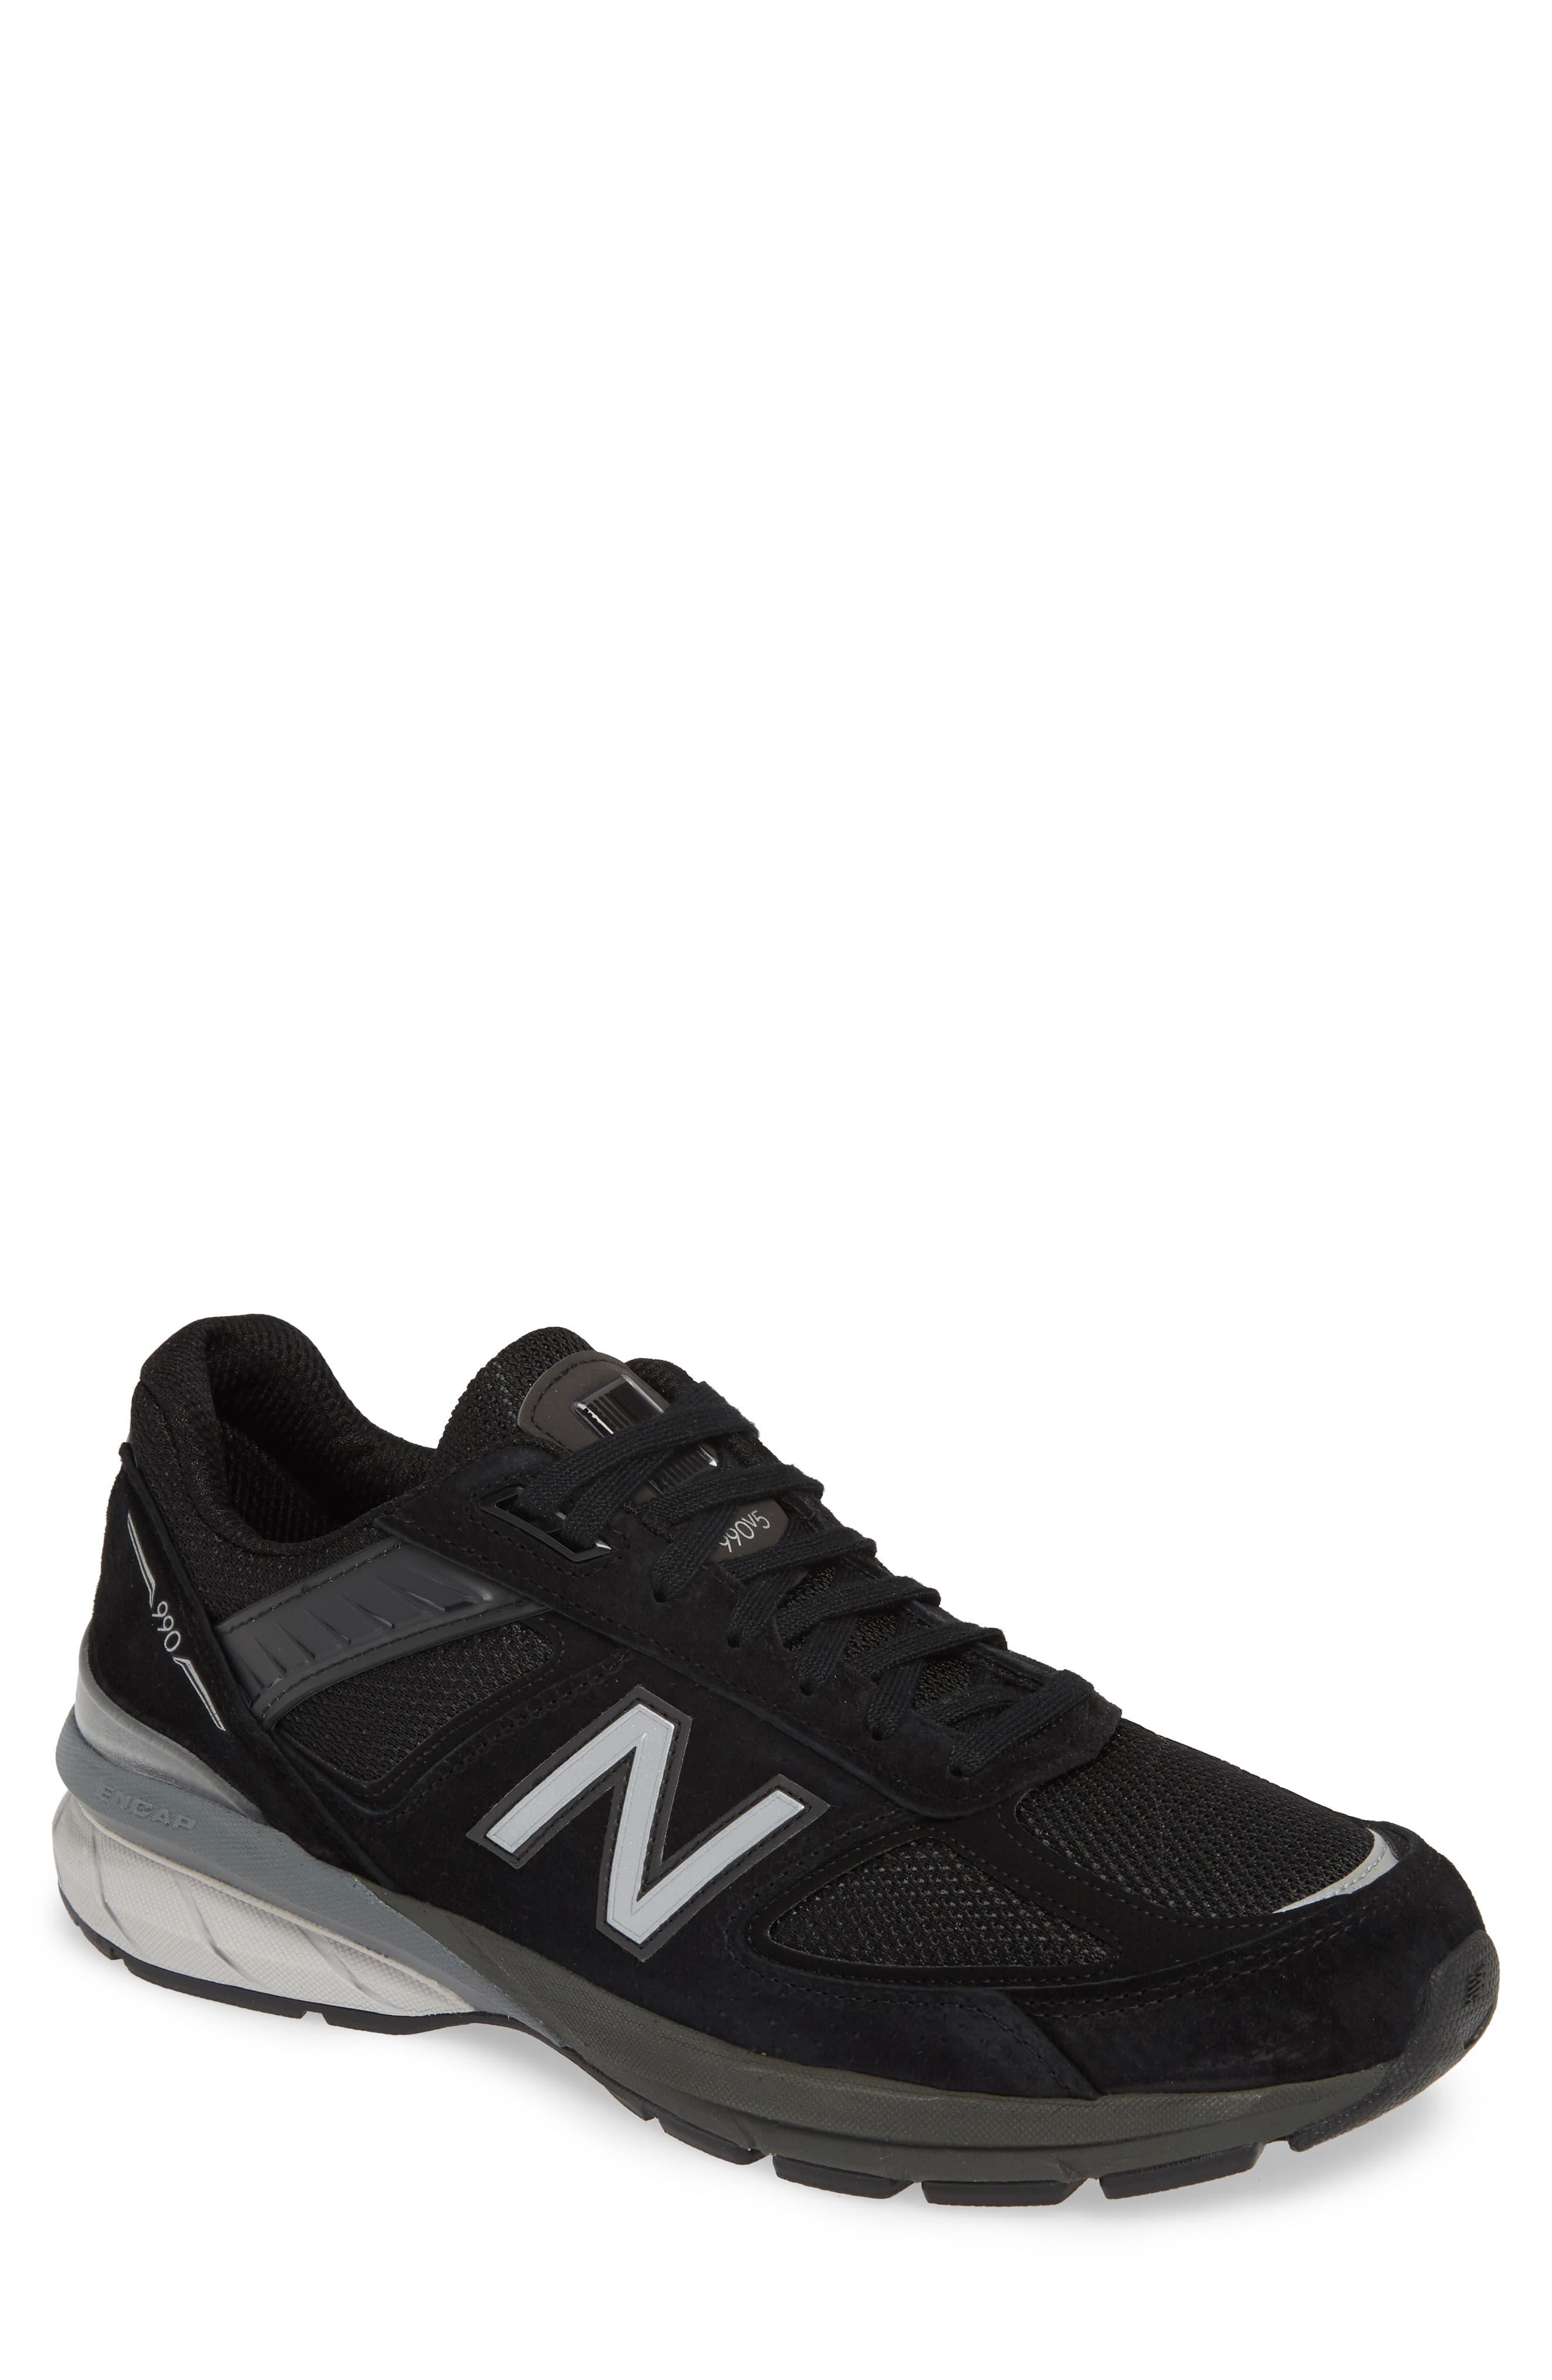 New Balance 990 V5 Running Shoe in Black for Men - Save 1% - Lyst